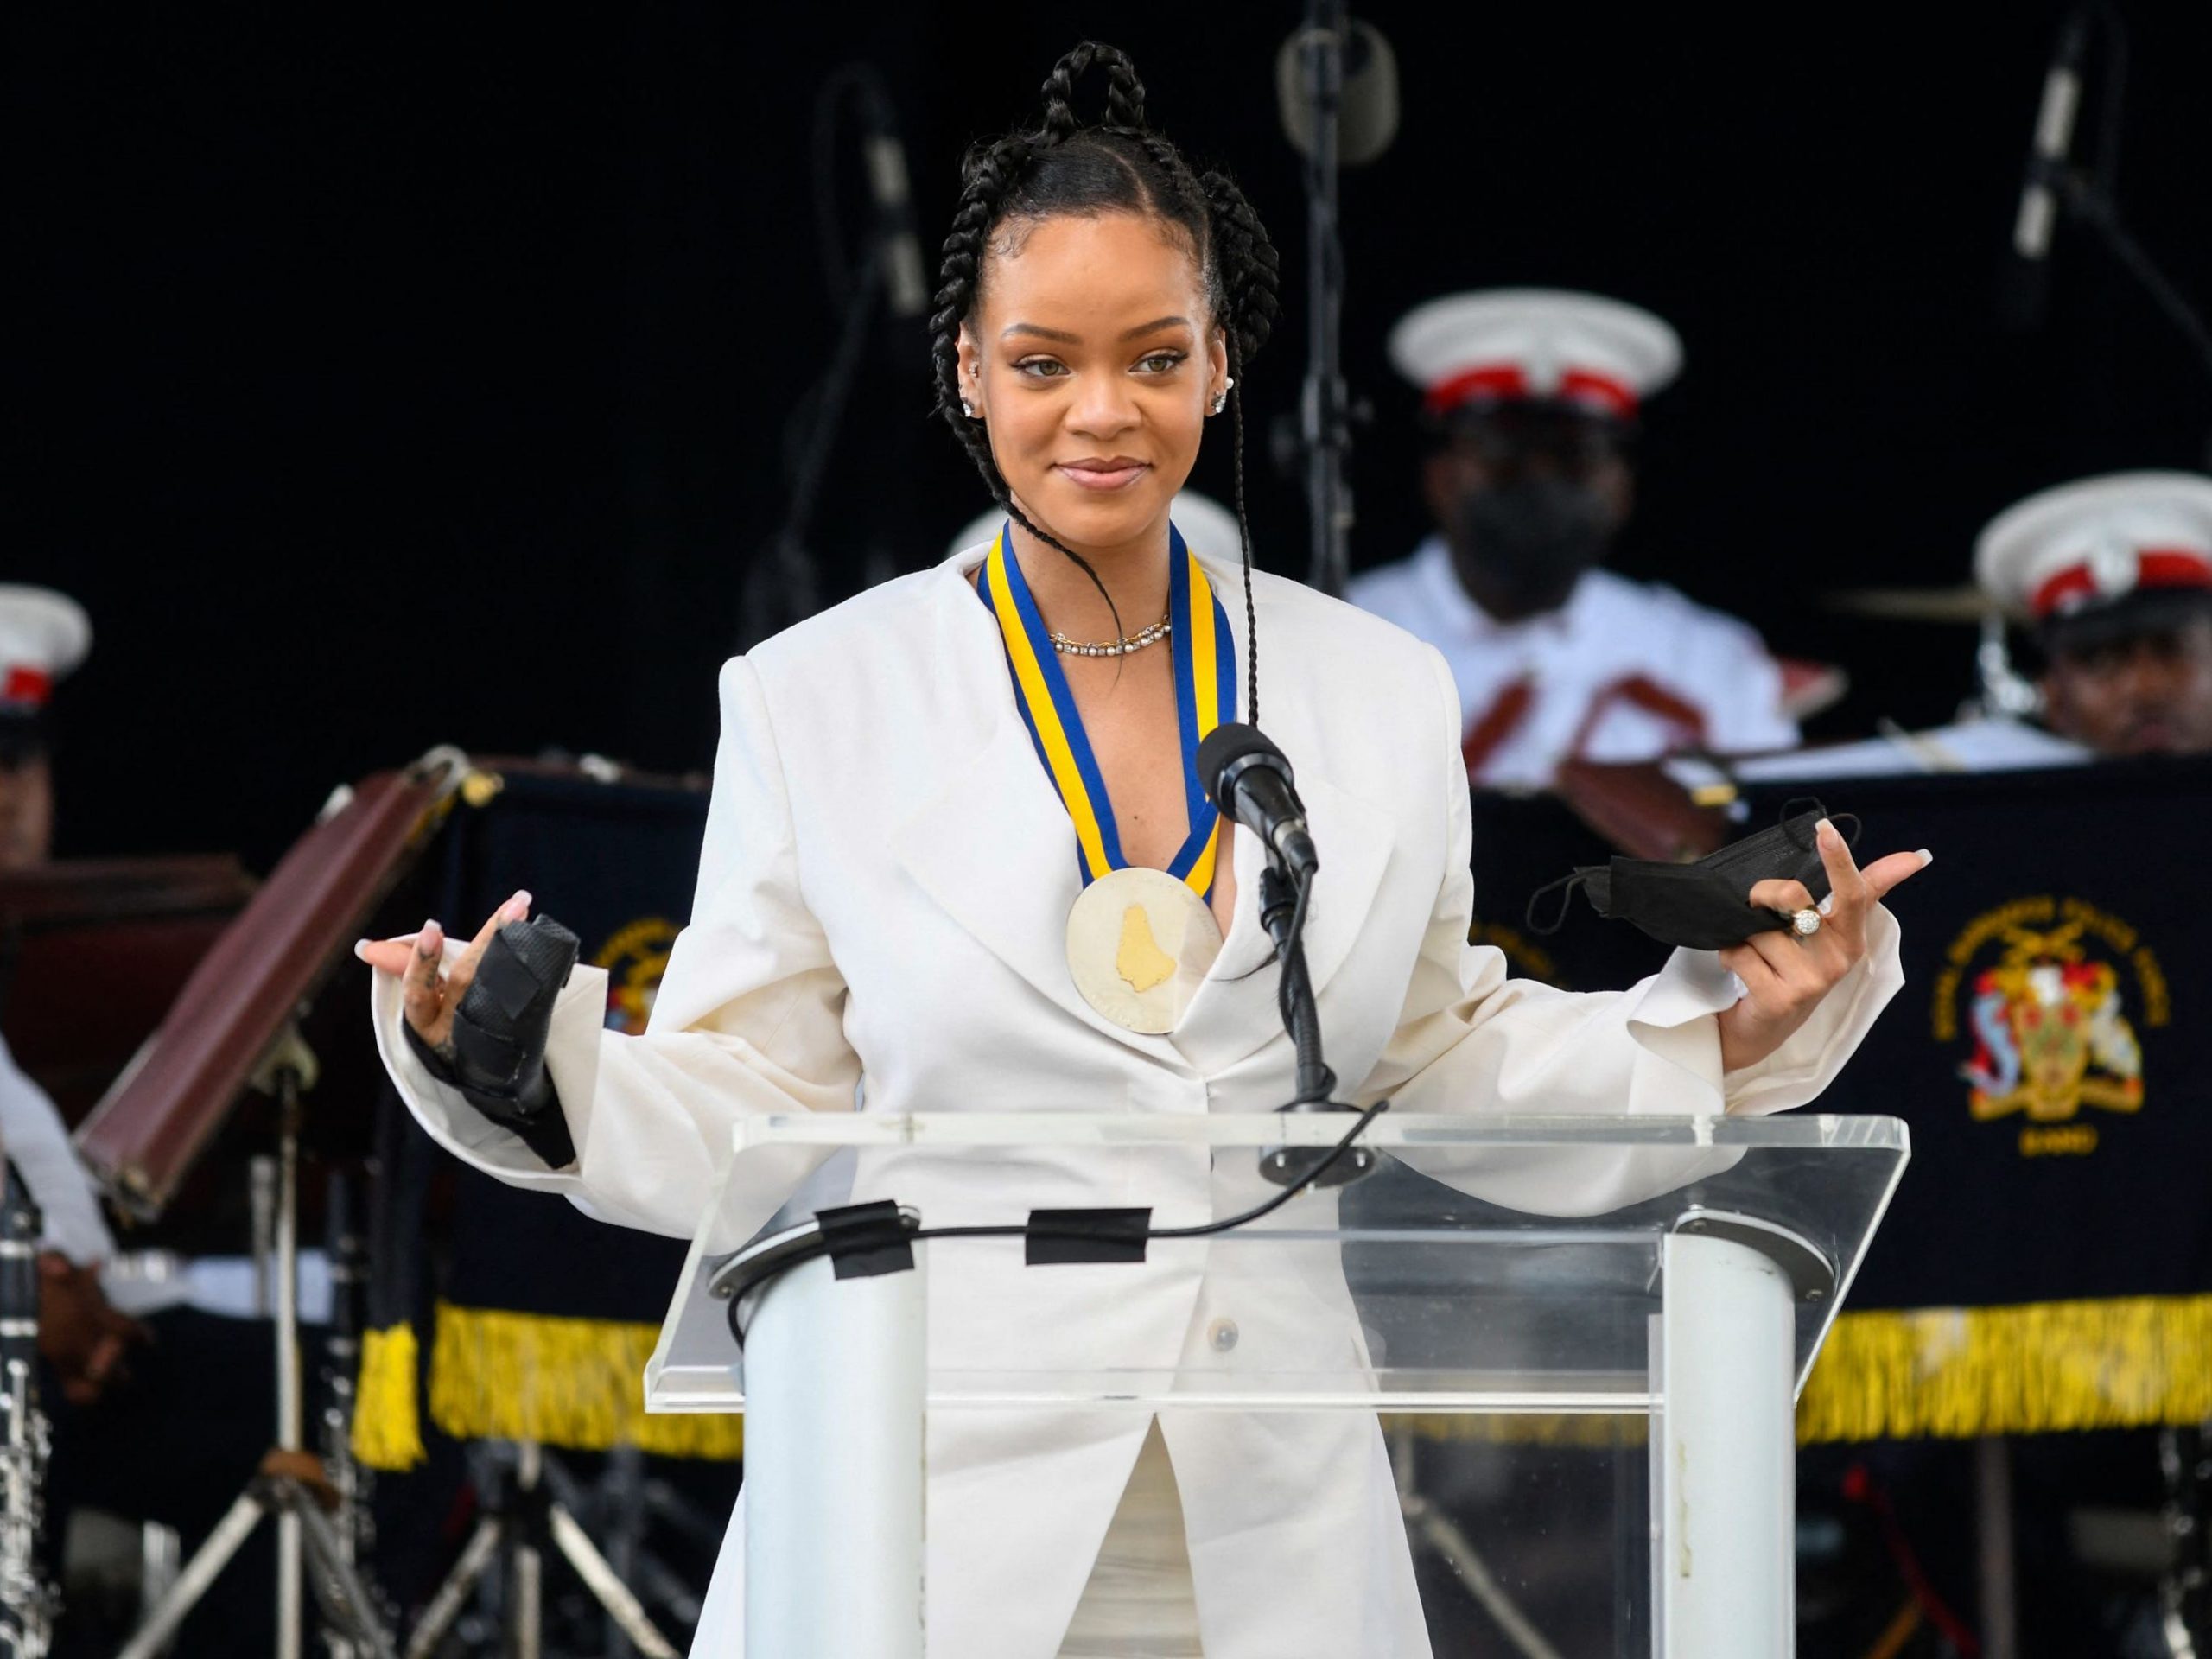 Rihanna speaks in Barbados.